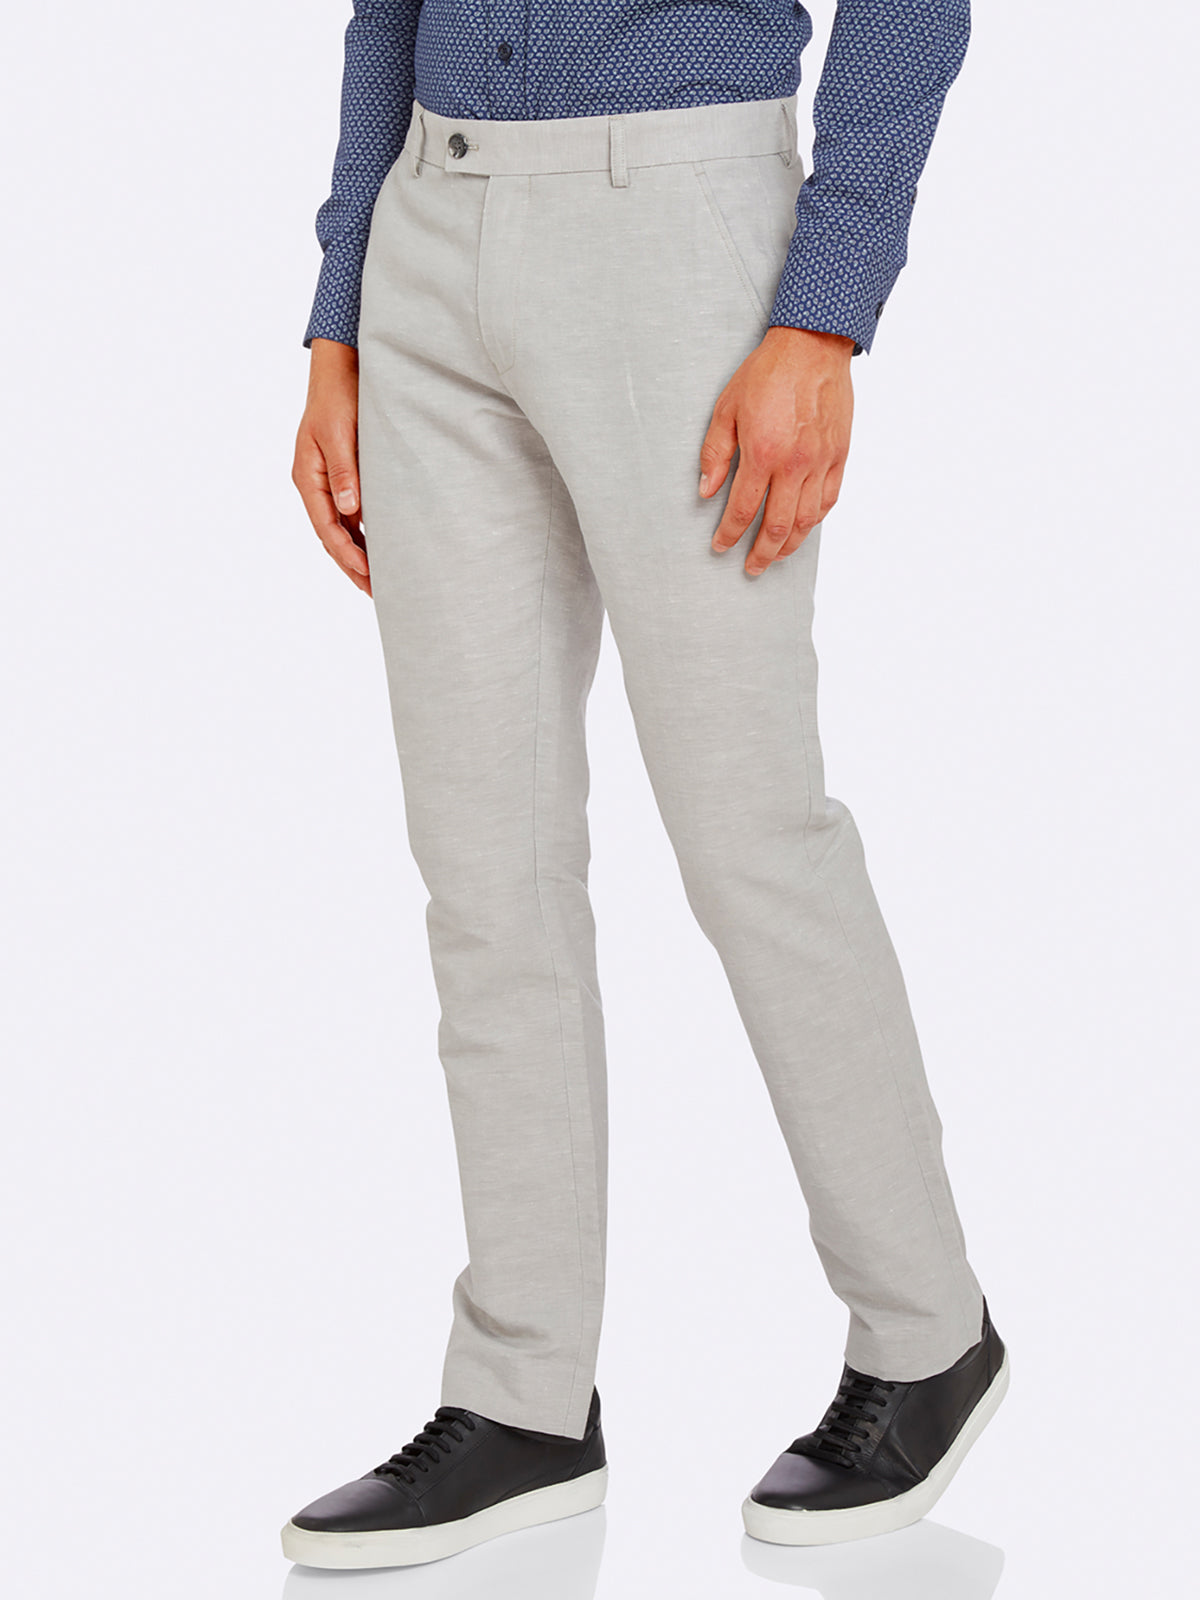 IVY OXFORD Pantalone da uomo Pants Trousers Beige Cotone Casual Comodo Size  48 | eBay